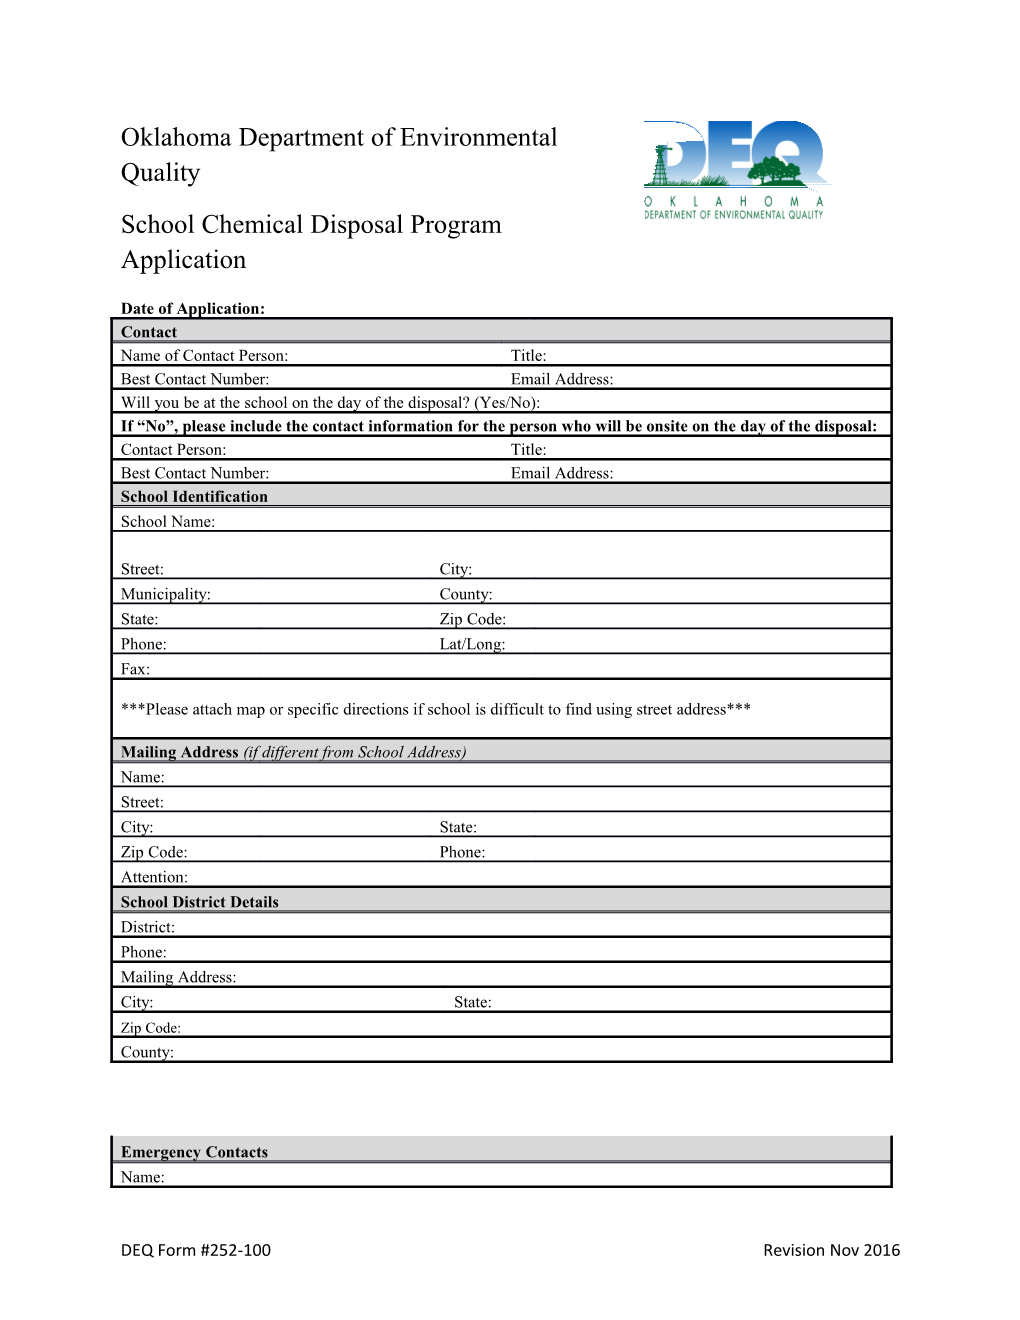 School Chemical Disposal Program Application